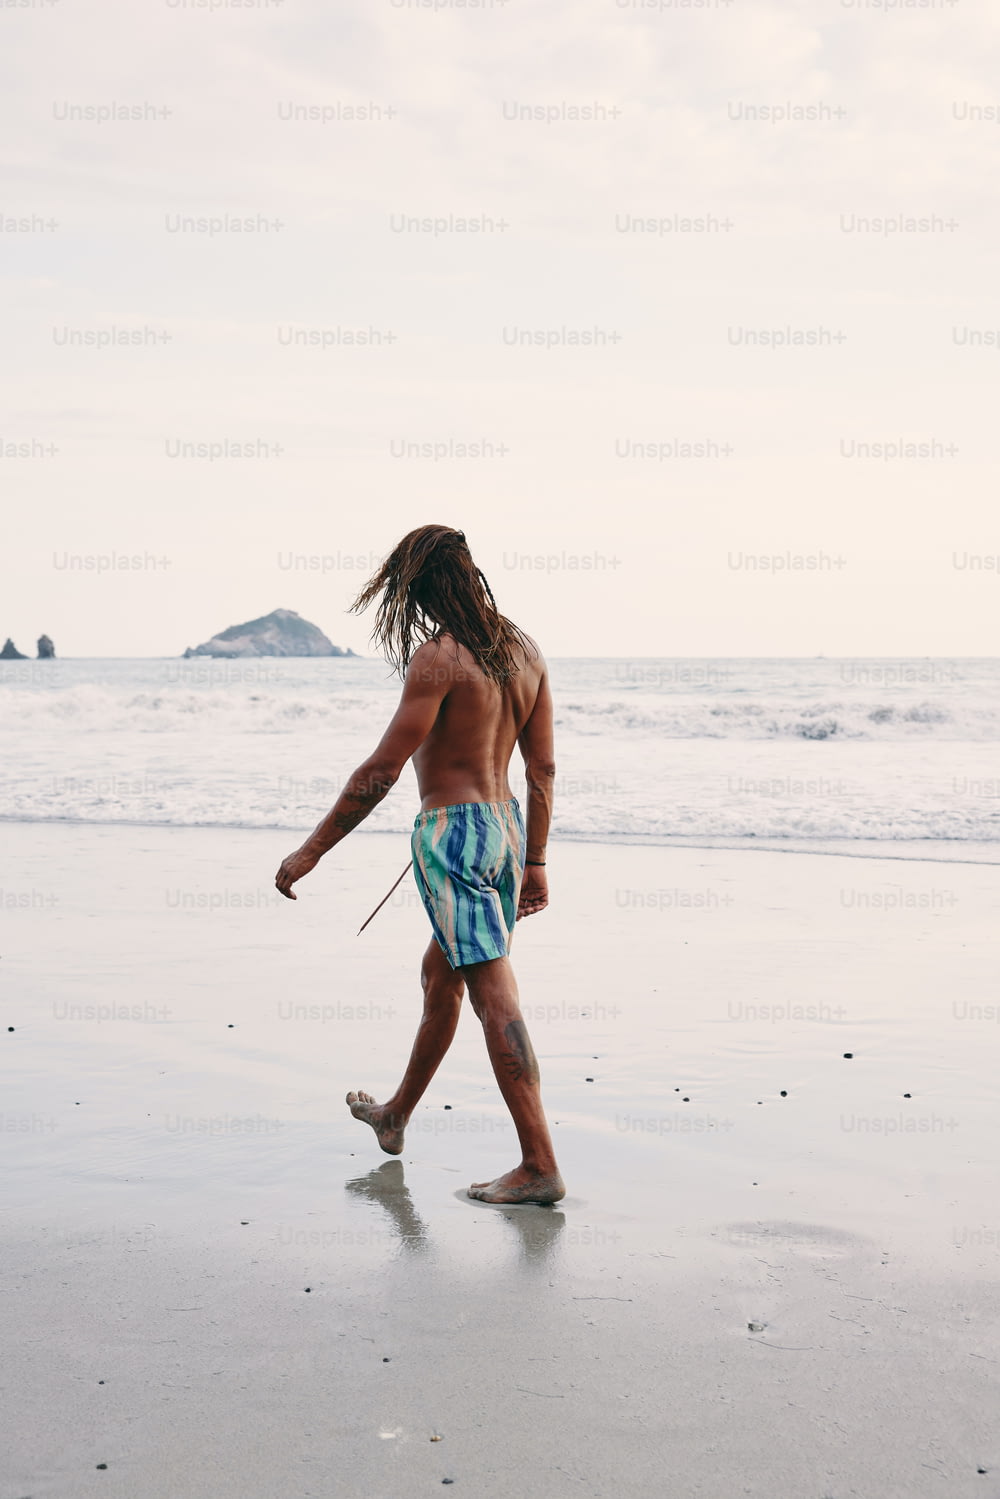 a man with dreadlocks walking on the beach